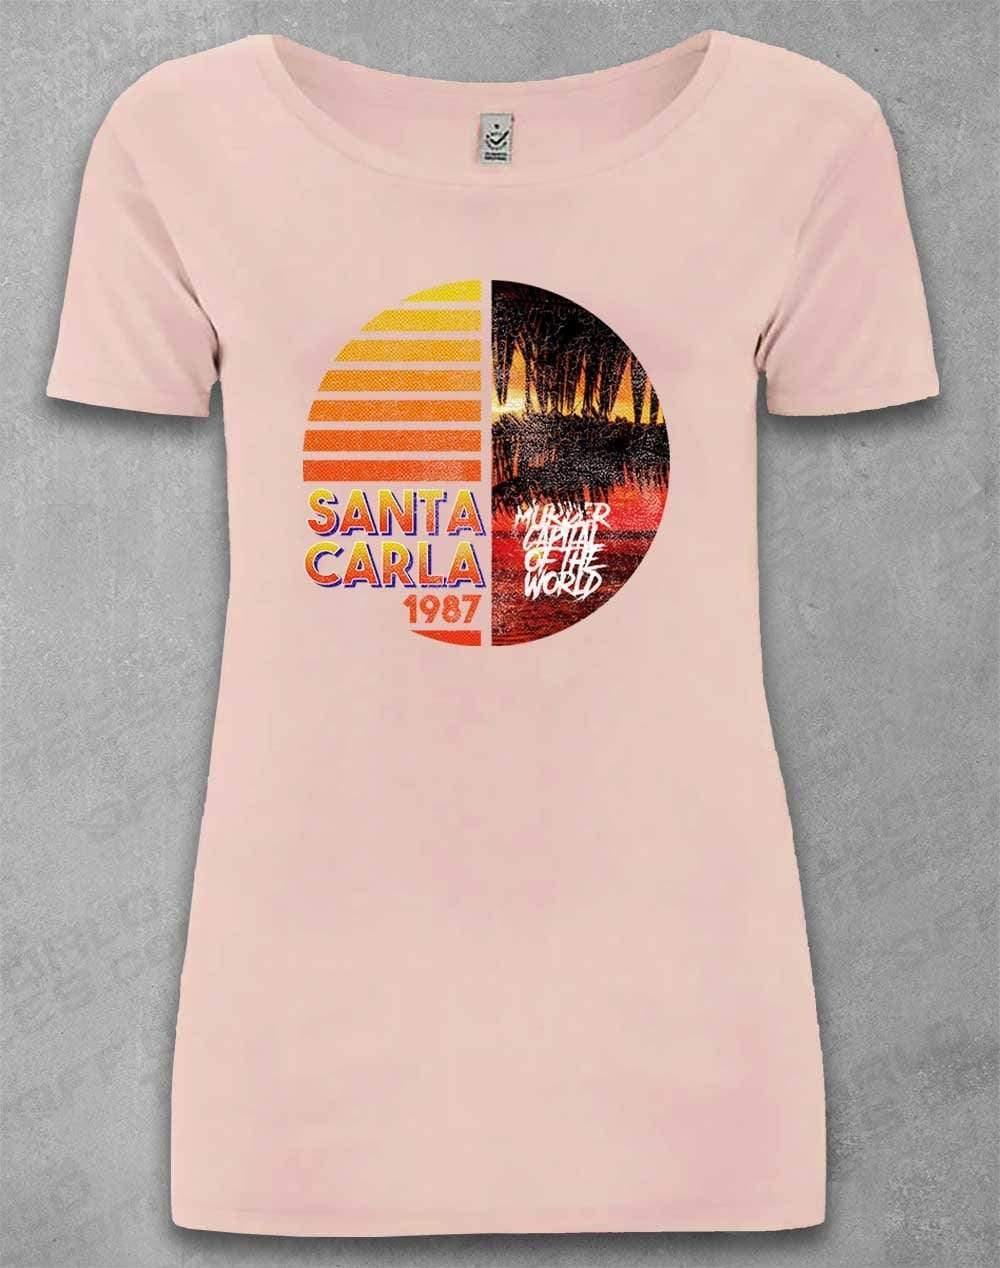 DELUXE Santa Carla 1987 - Organic Scoop Neck T-Shirt 8-10 / Light Pink  - Off World Tees